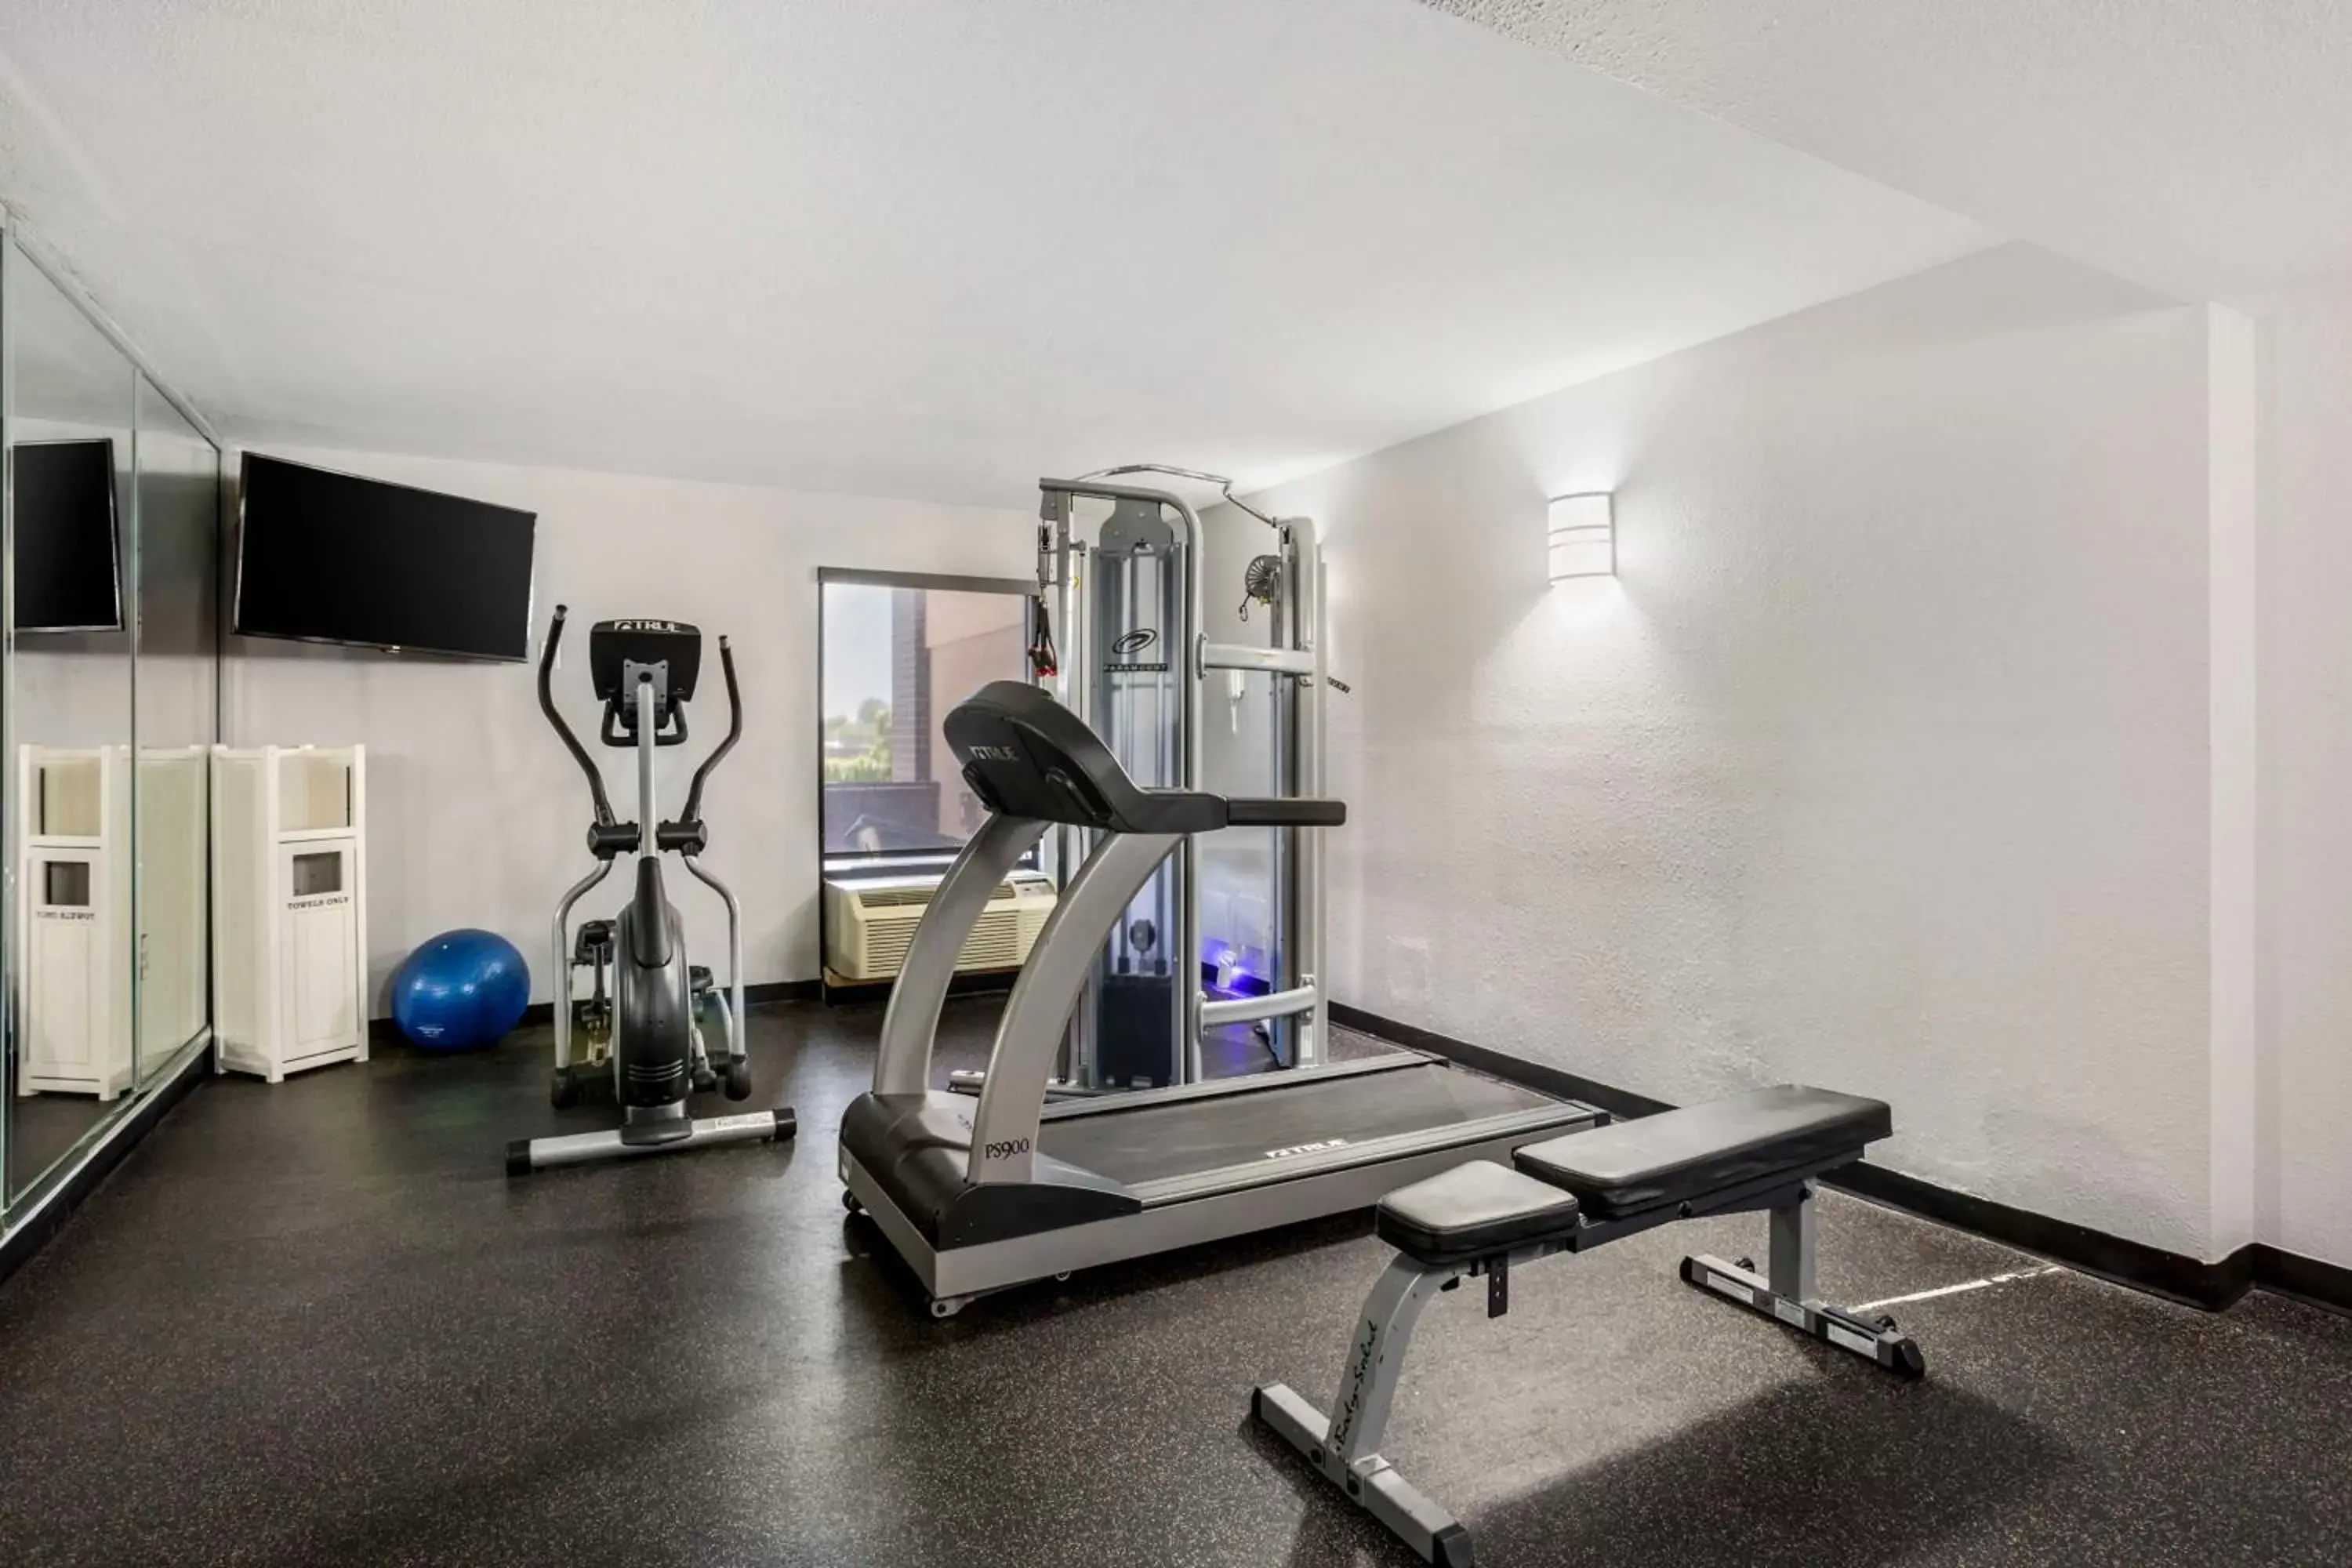 Fitness centre/facilities, Fitness Center/Facilities in Best Western Plus Jonesboro Inn & Suites